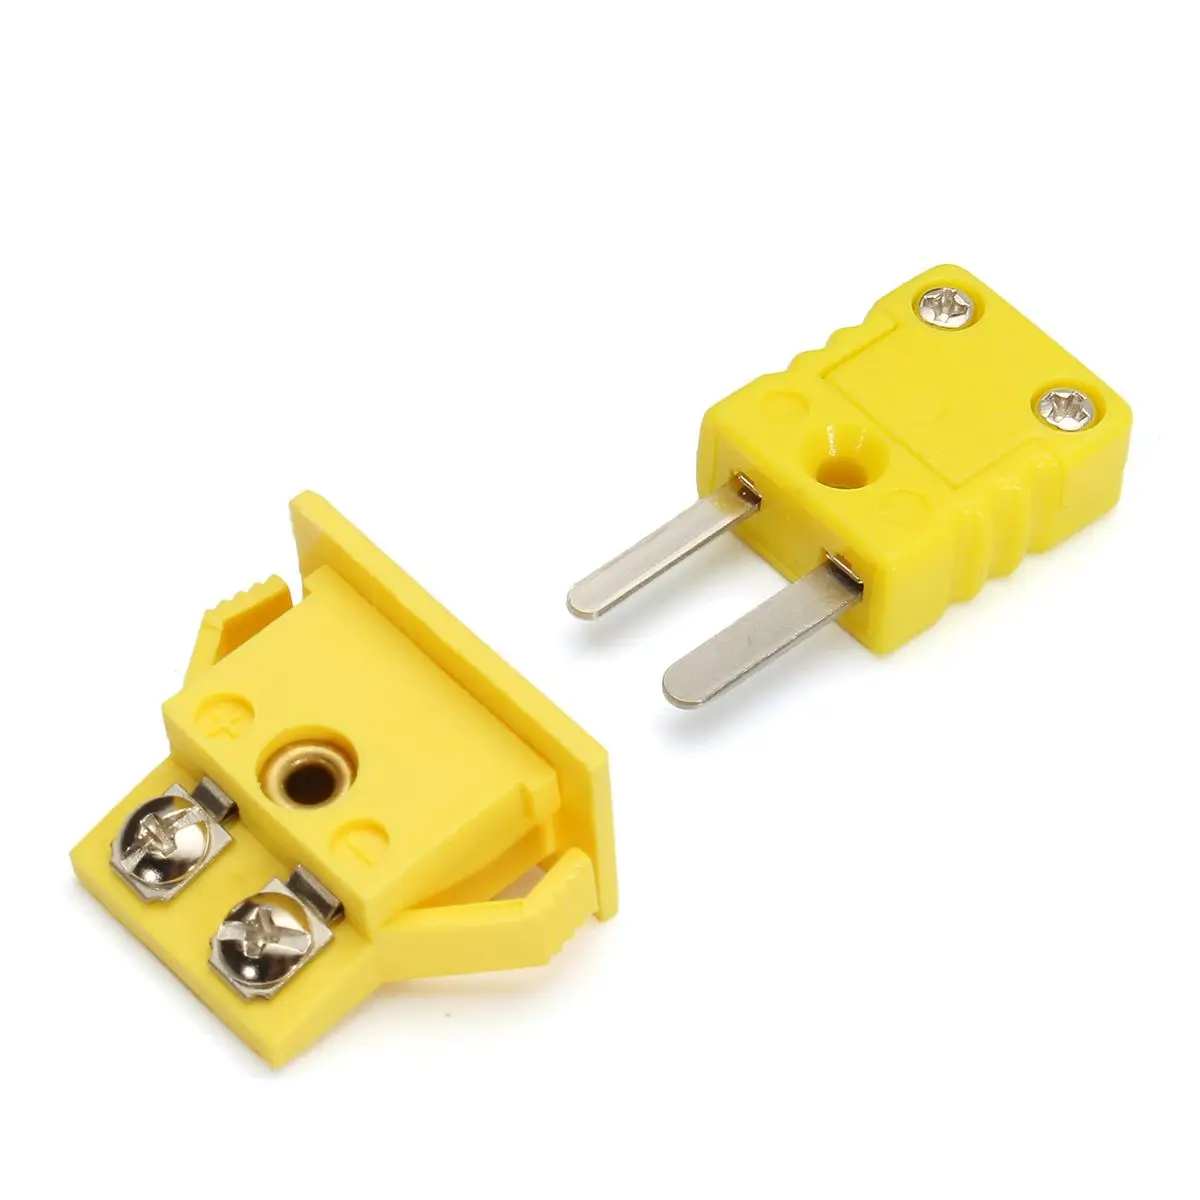 Thermocouple K Type Miniature Socket & Panel Mount Alloy Plug Connector Set 